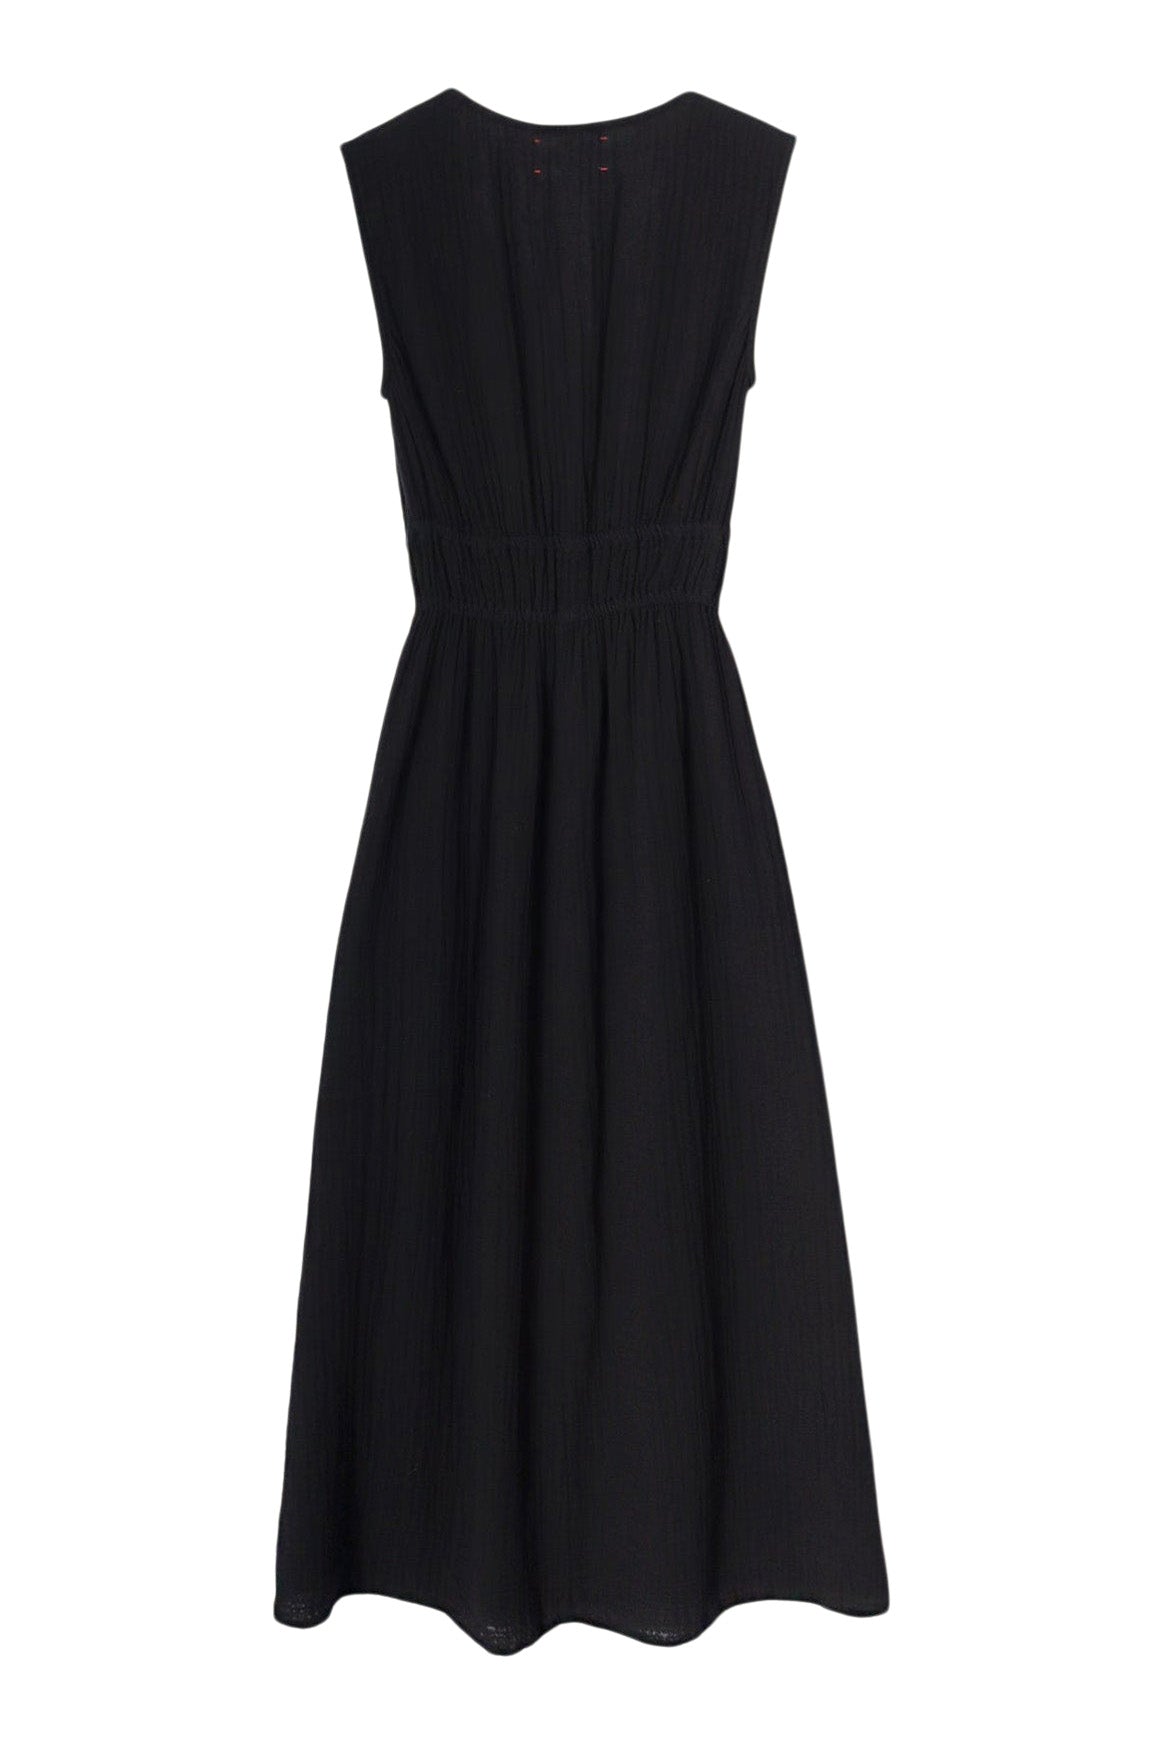 Xirena Arwen Dress in Black